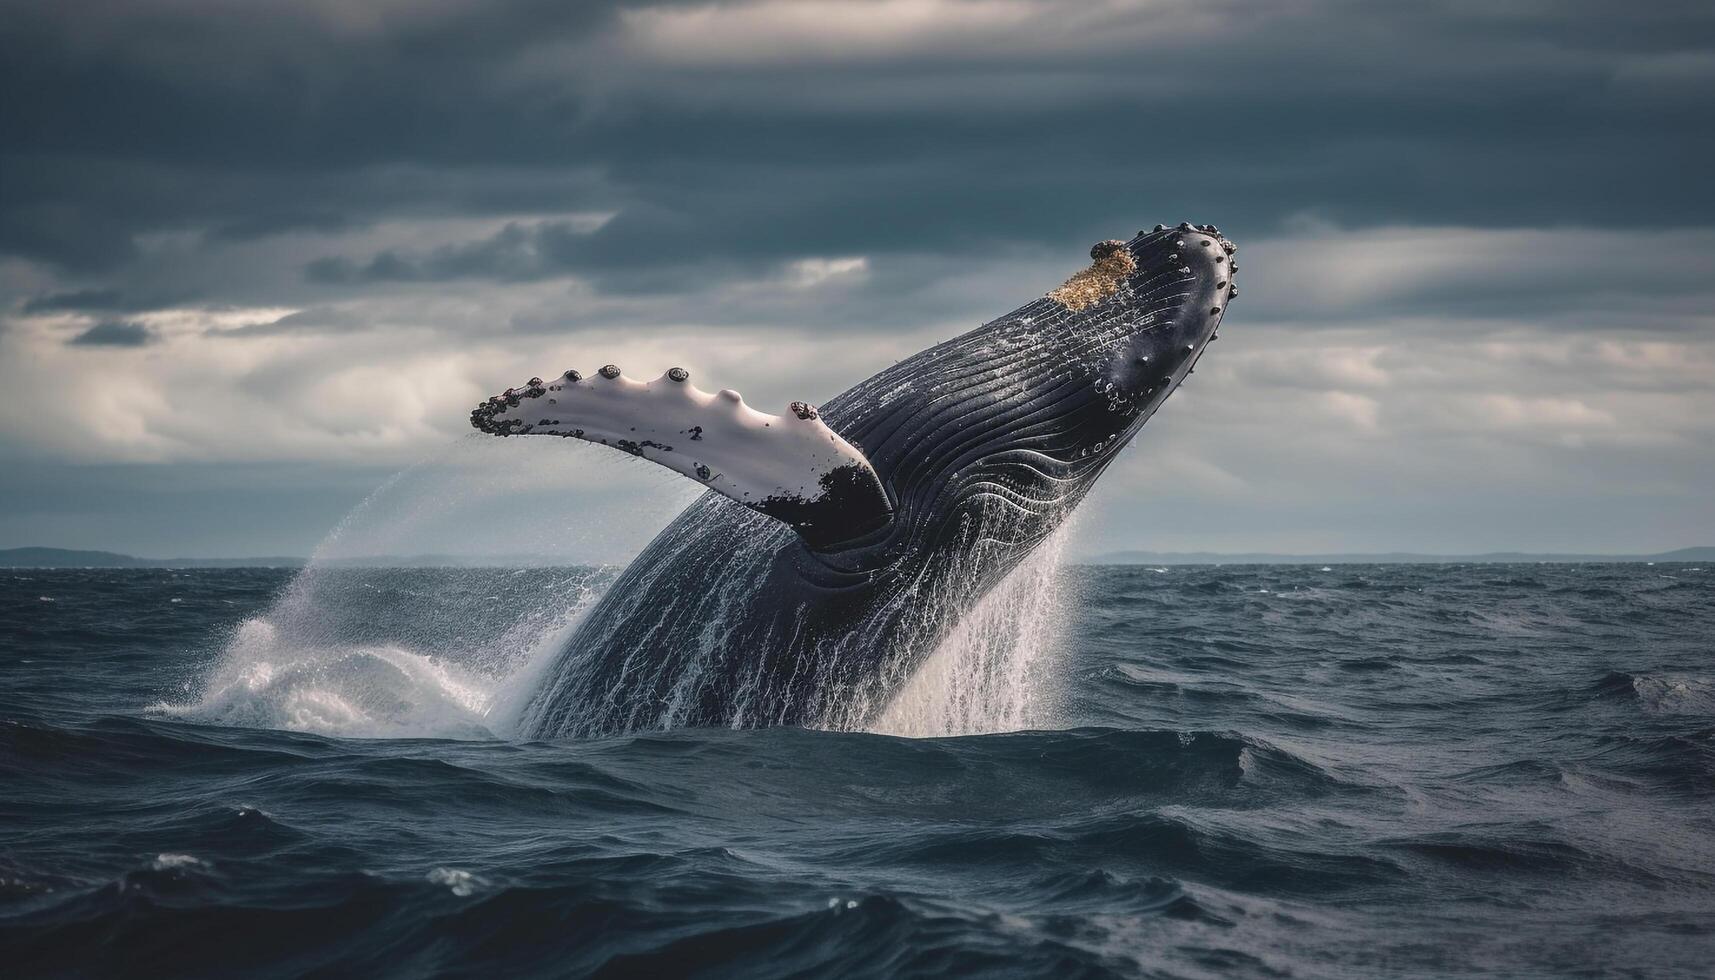 Majestic giant mammal breaching, splashing, tail fin waving, whale watching generated by AI photo